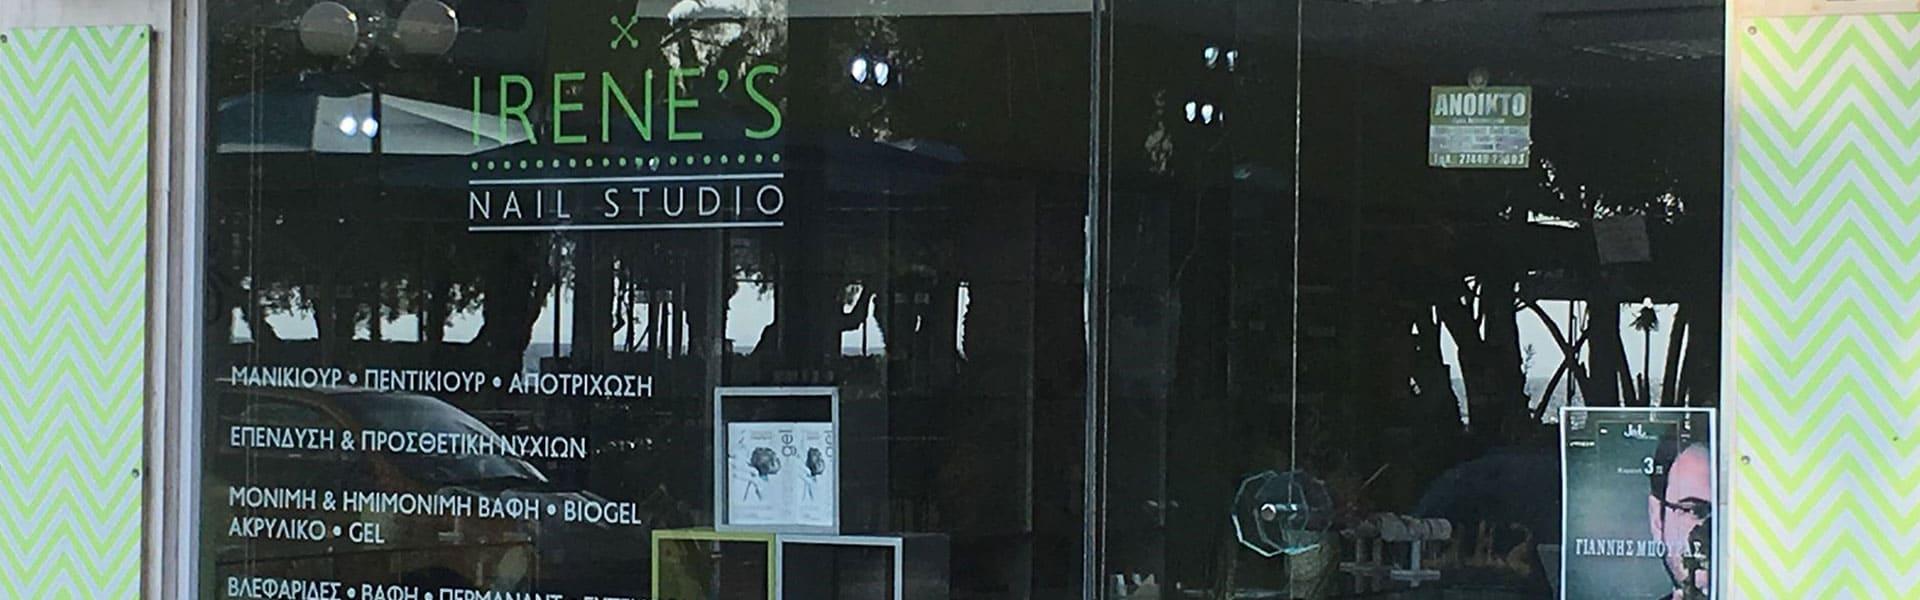 IRENE's NAIL STUDIO shop